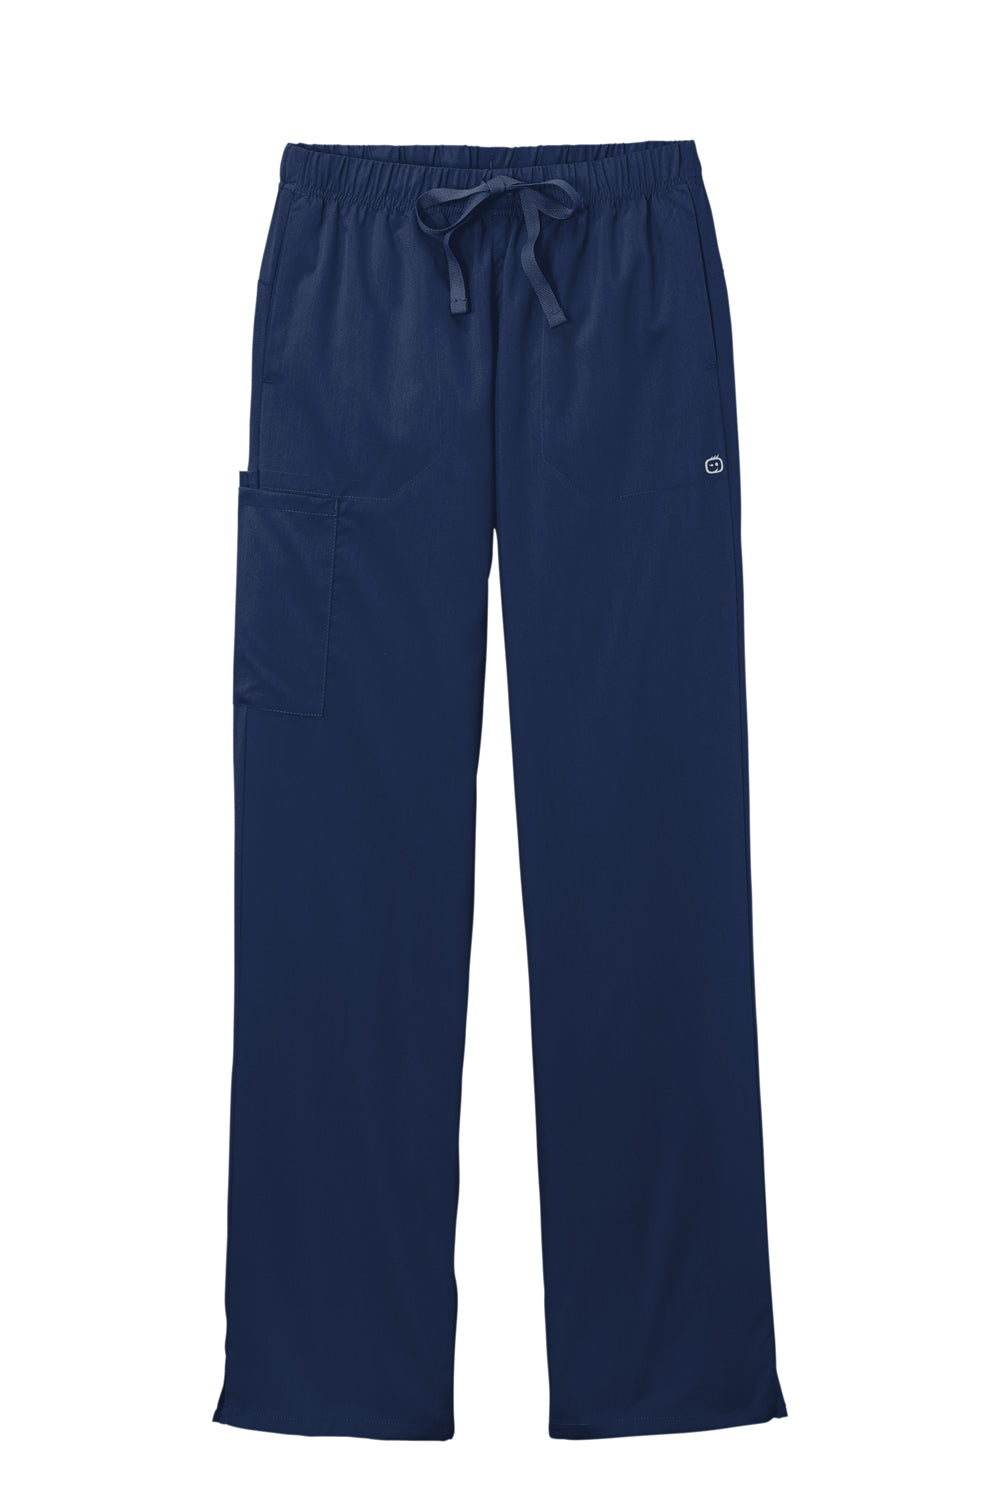 Wonderwink WW4158 Premiere Flex Cargo Pants w/ Pockets Navy Blue Flat Front